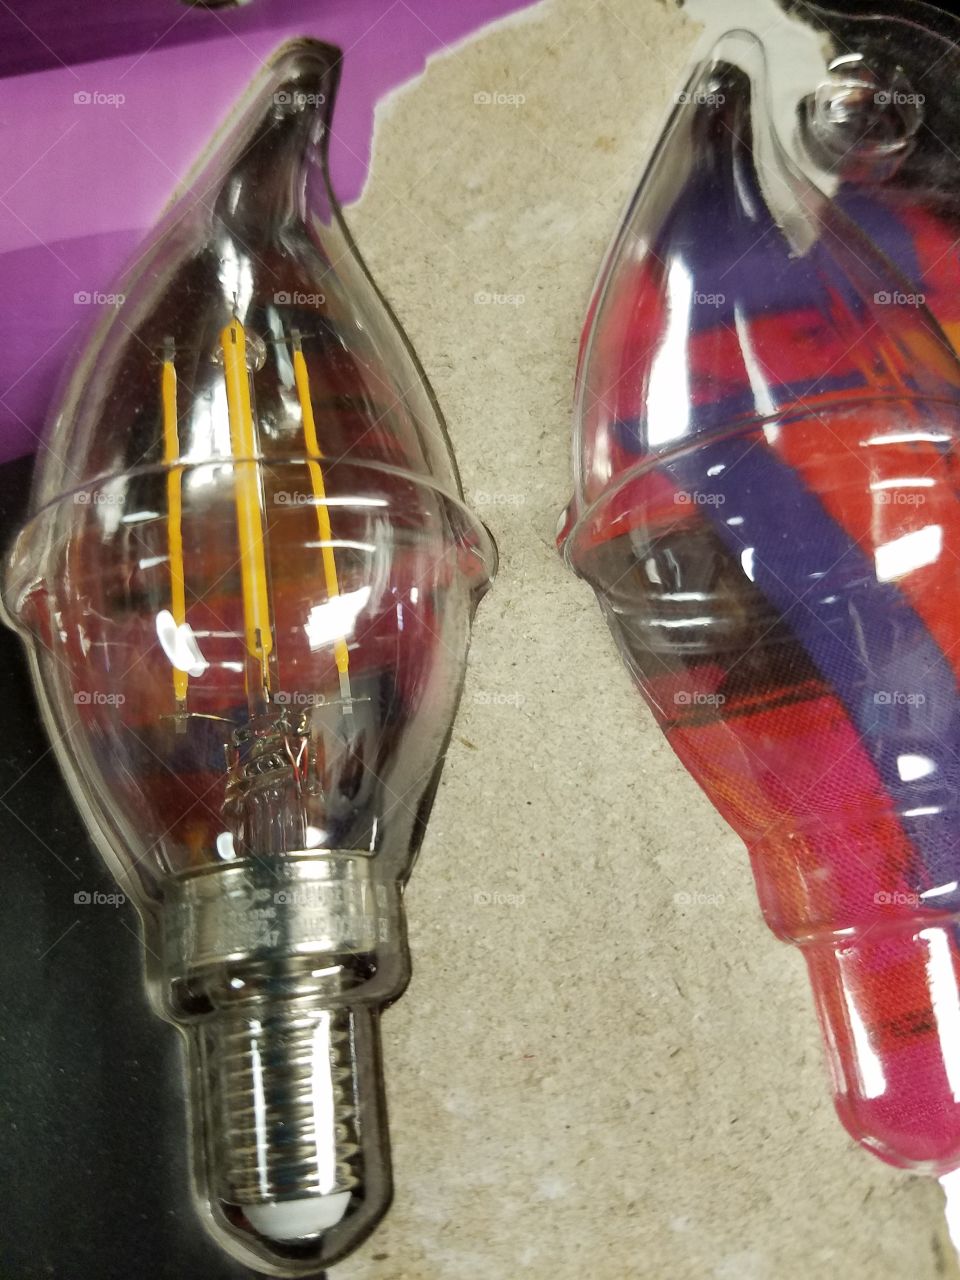 Light bulbs static